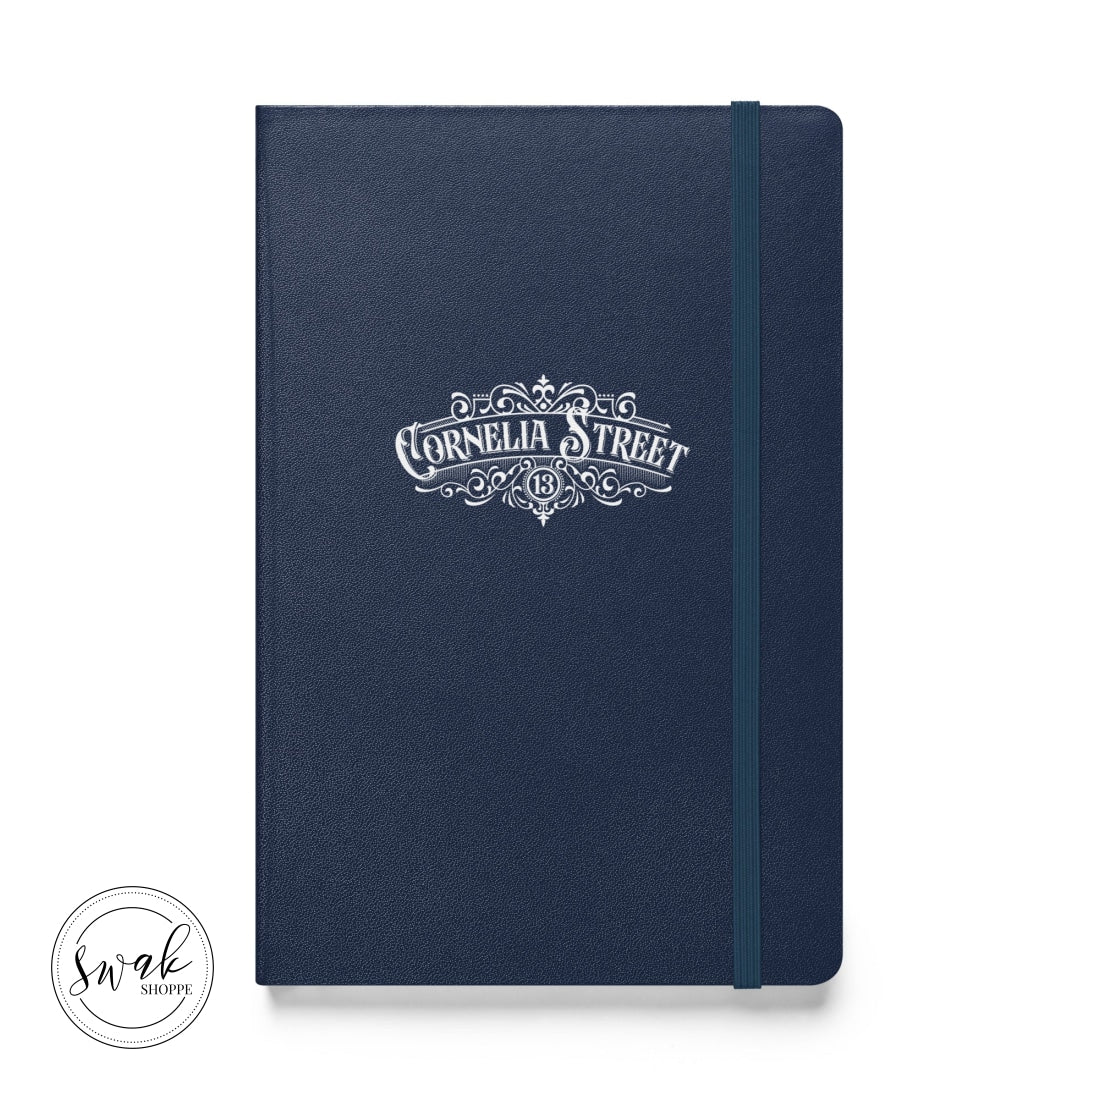 Cornelia Street Hardcover Bound Notebook Journal Navy